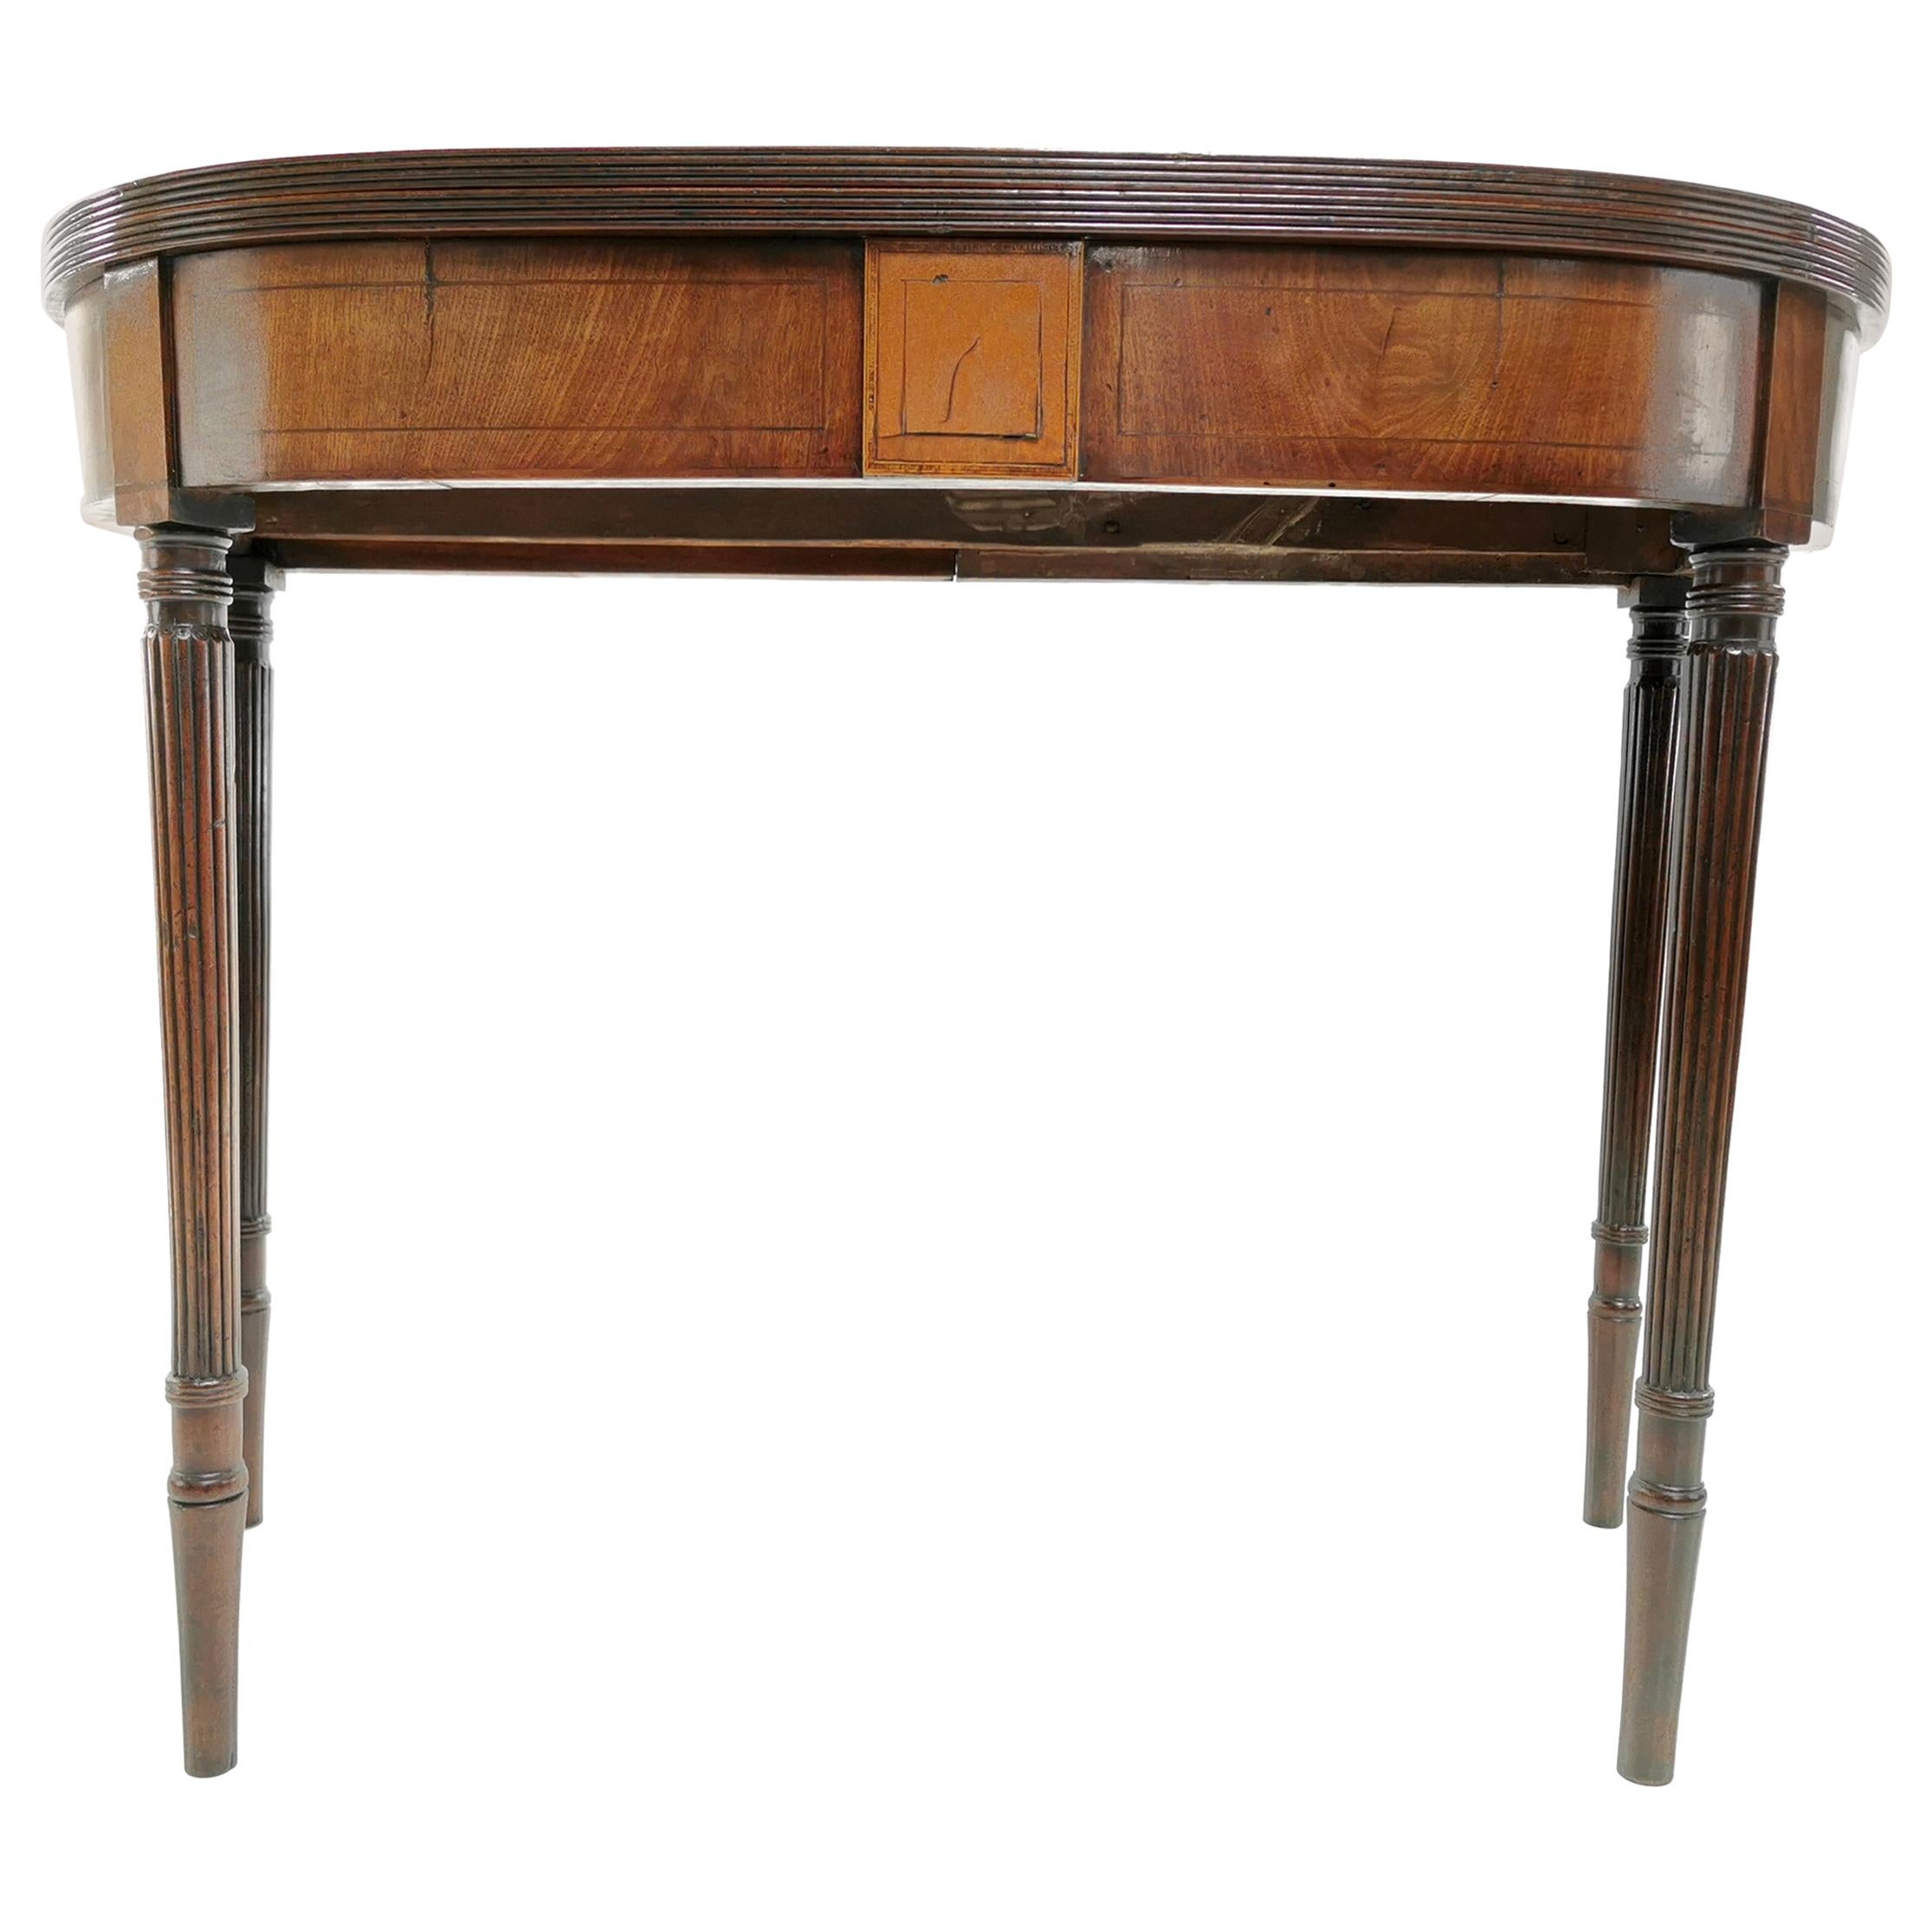 19th Century Antique British Mahogany Hall Table or Desk